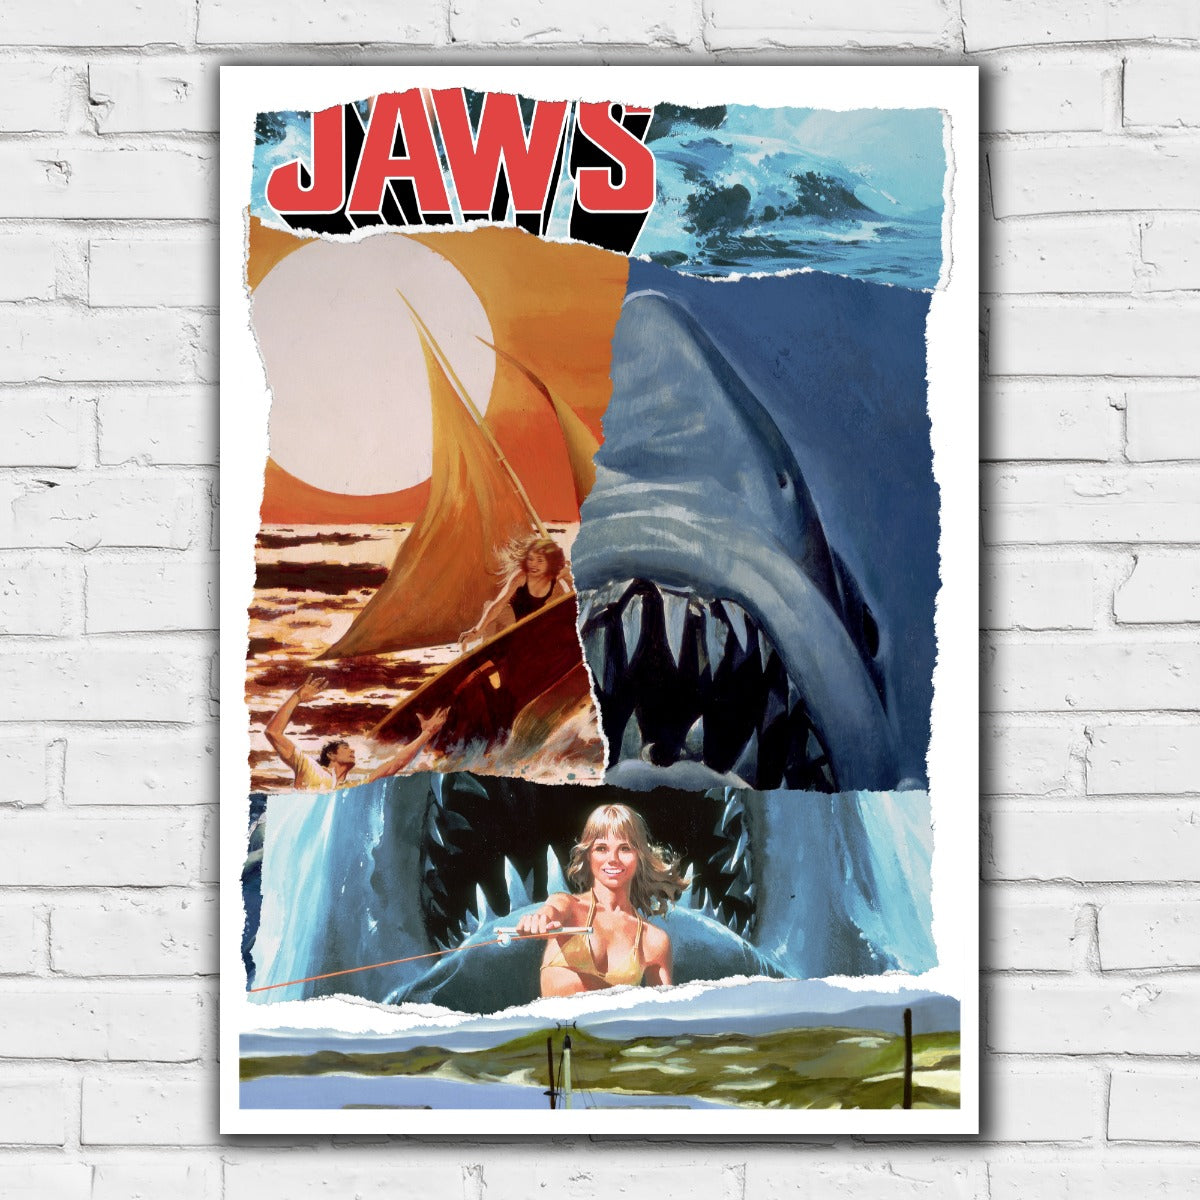 Jaws Print - Vintage Paper Collage Shark Poster